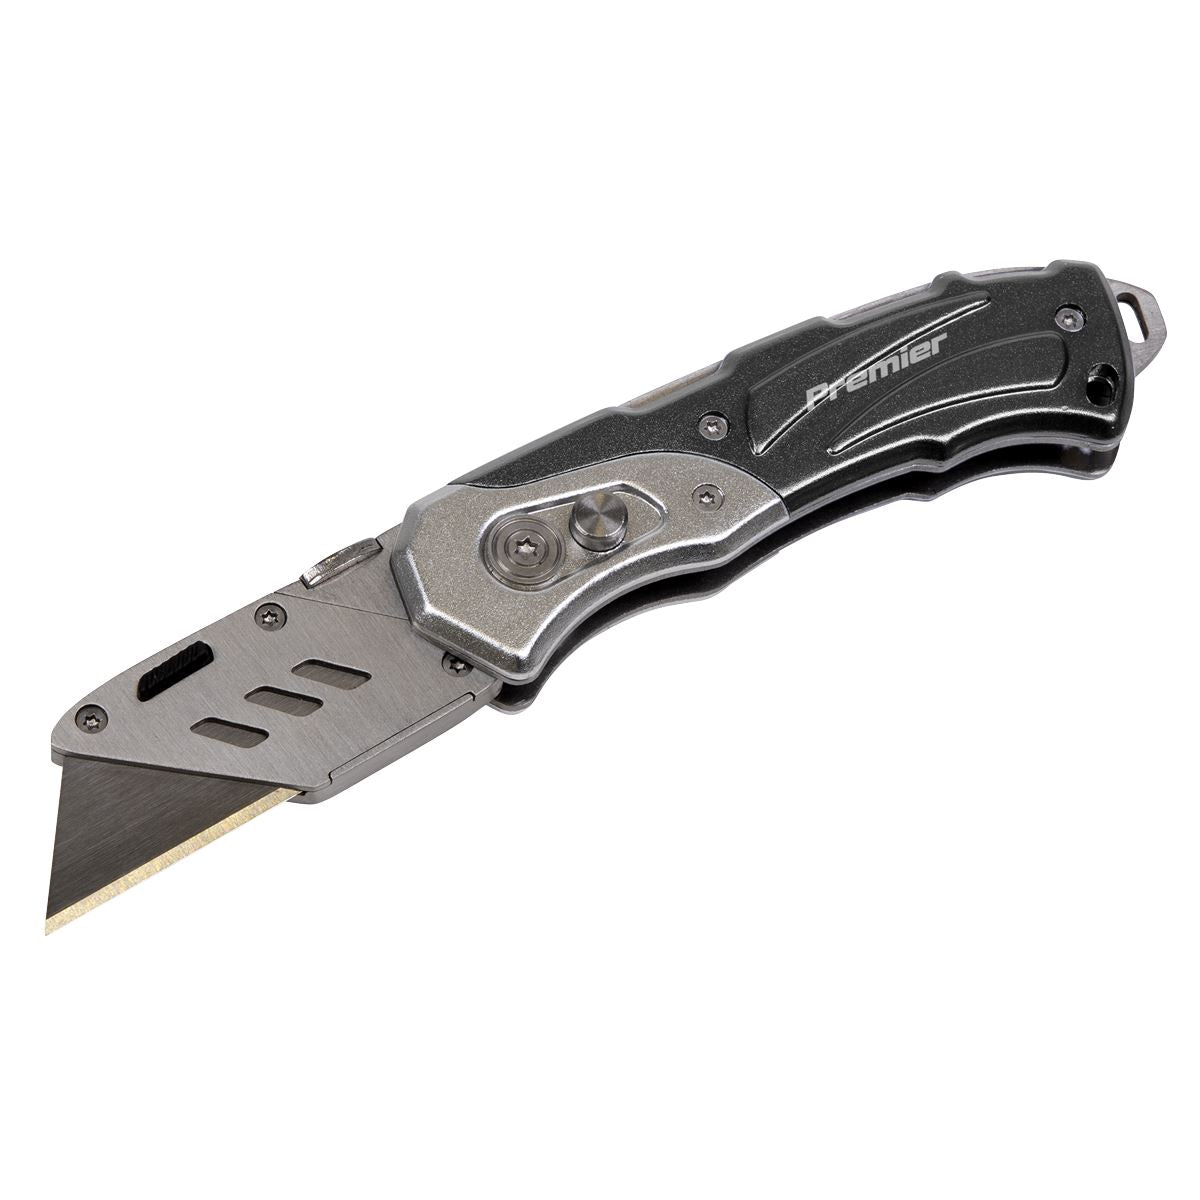 Sealey Premier Pocket Knife Locking with Quick Change Blade